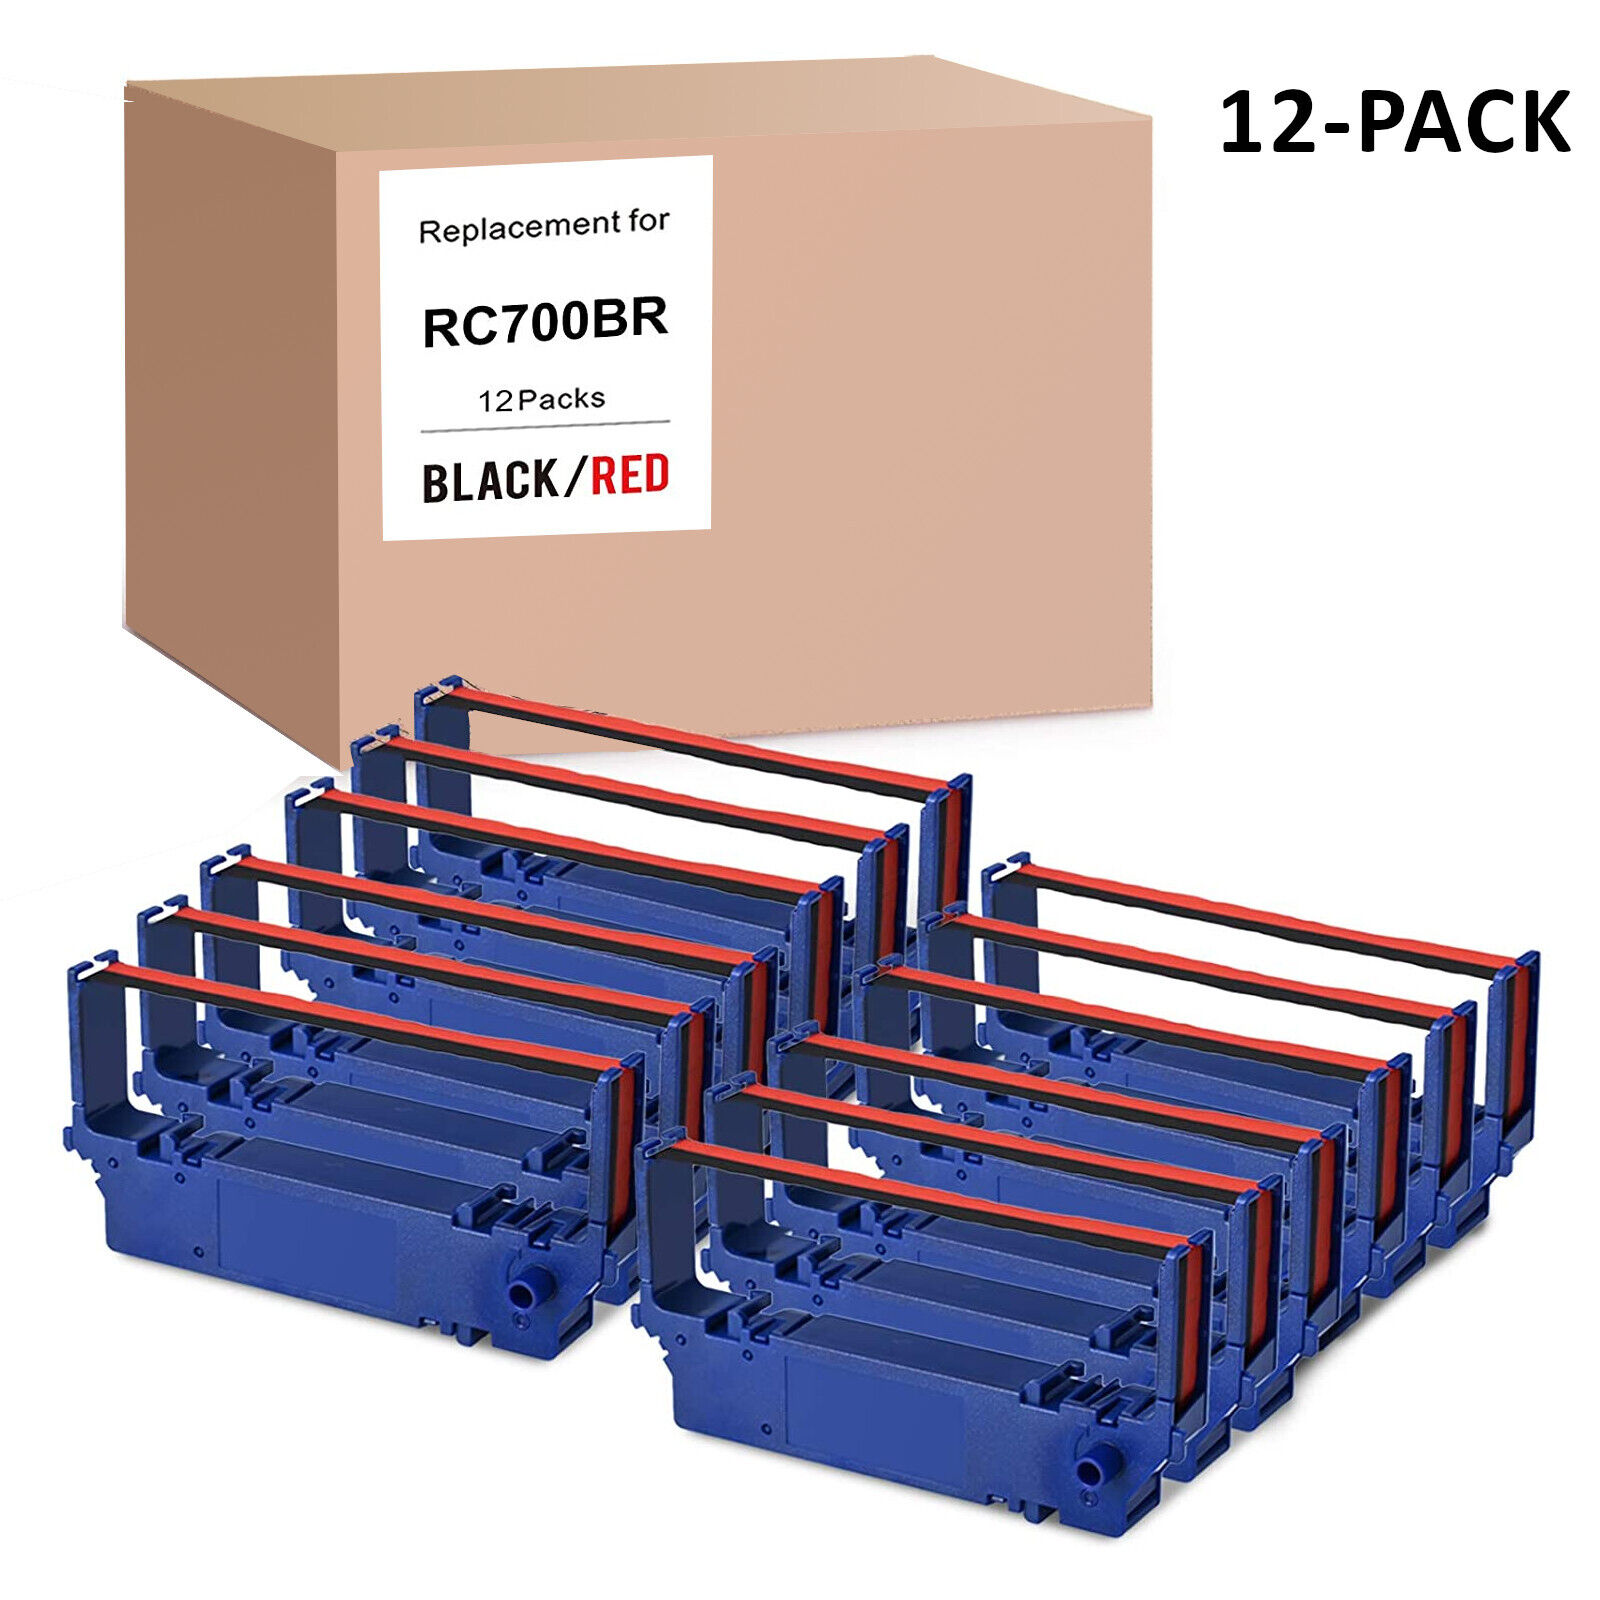 12 PACK For STAR SP-700 BLACK / RED Printer Ribbon Ink RC700BR, SP700, 712, 742